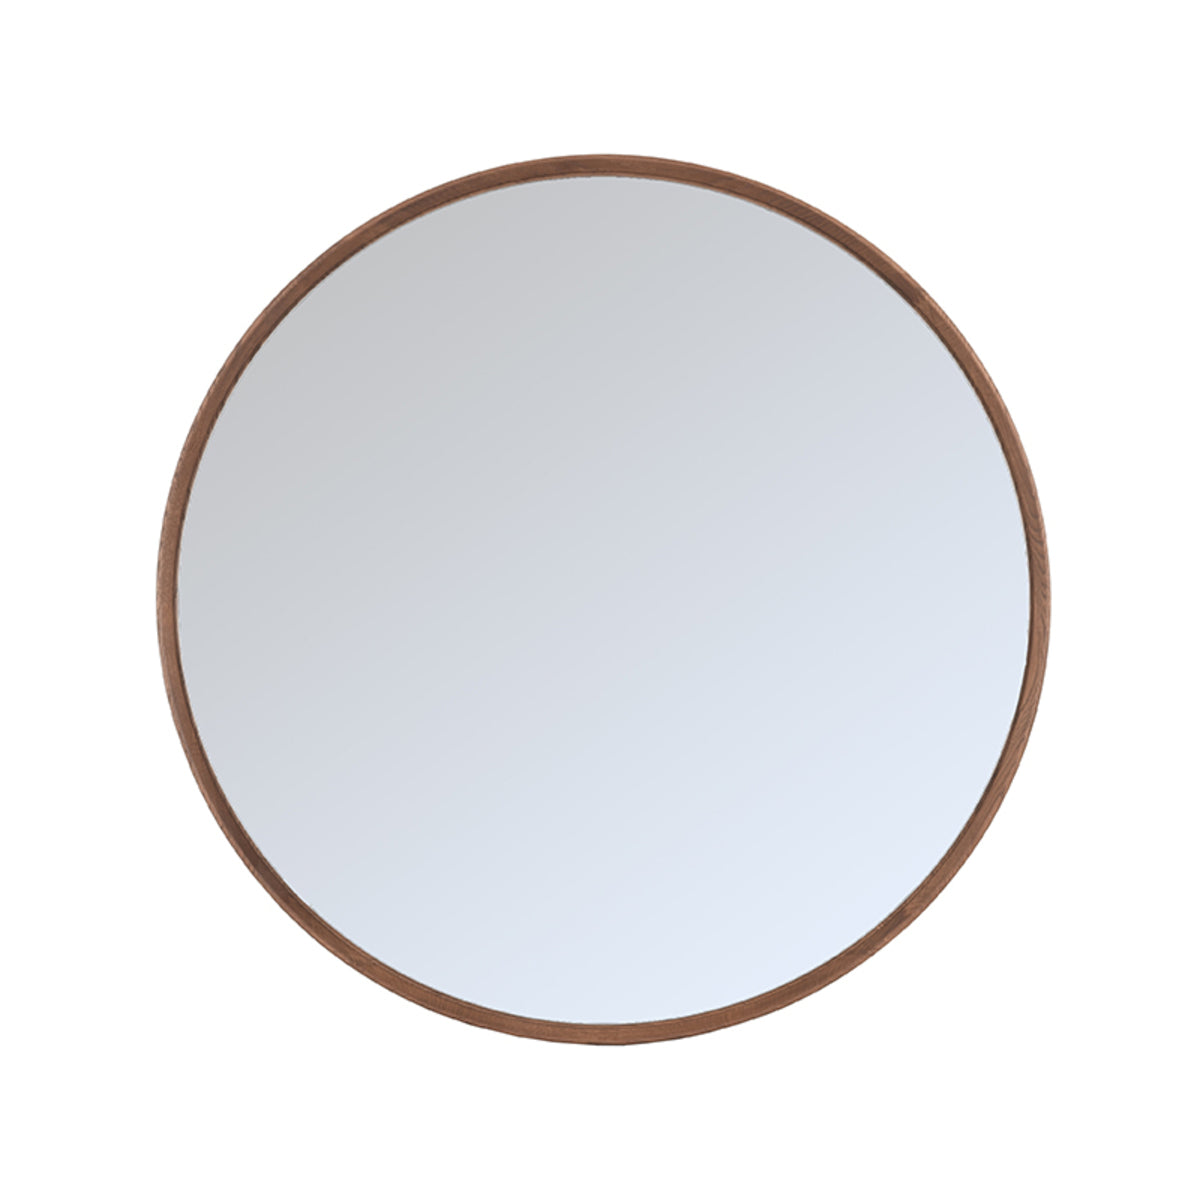 LABEL51 Mirror Oliva - Walnut - Oak - 110 cm